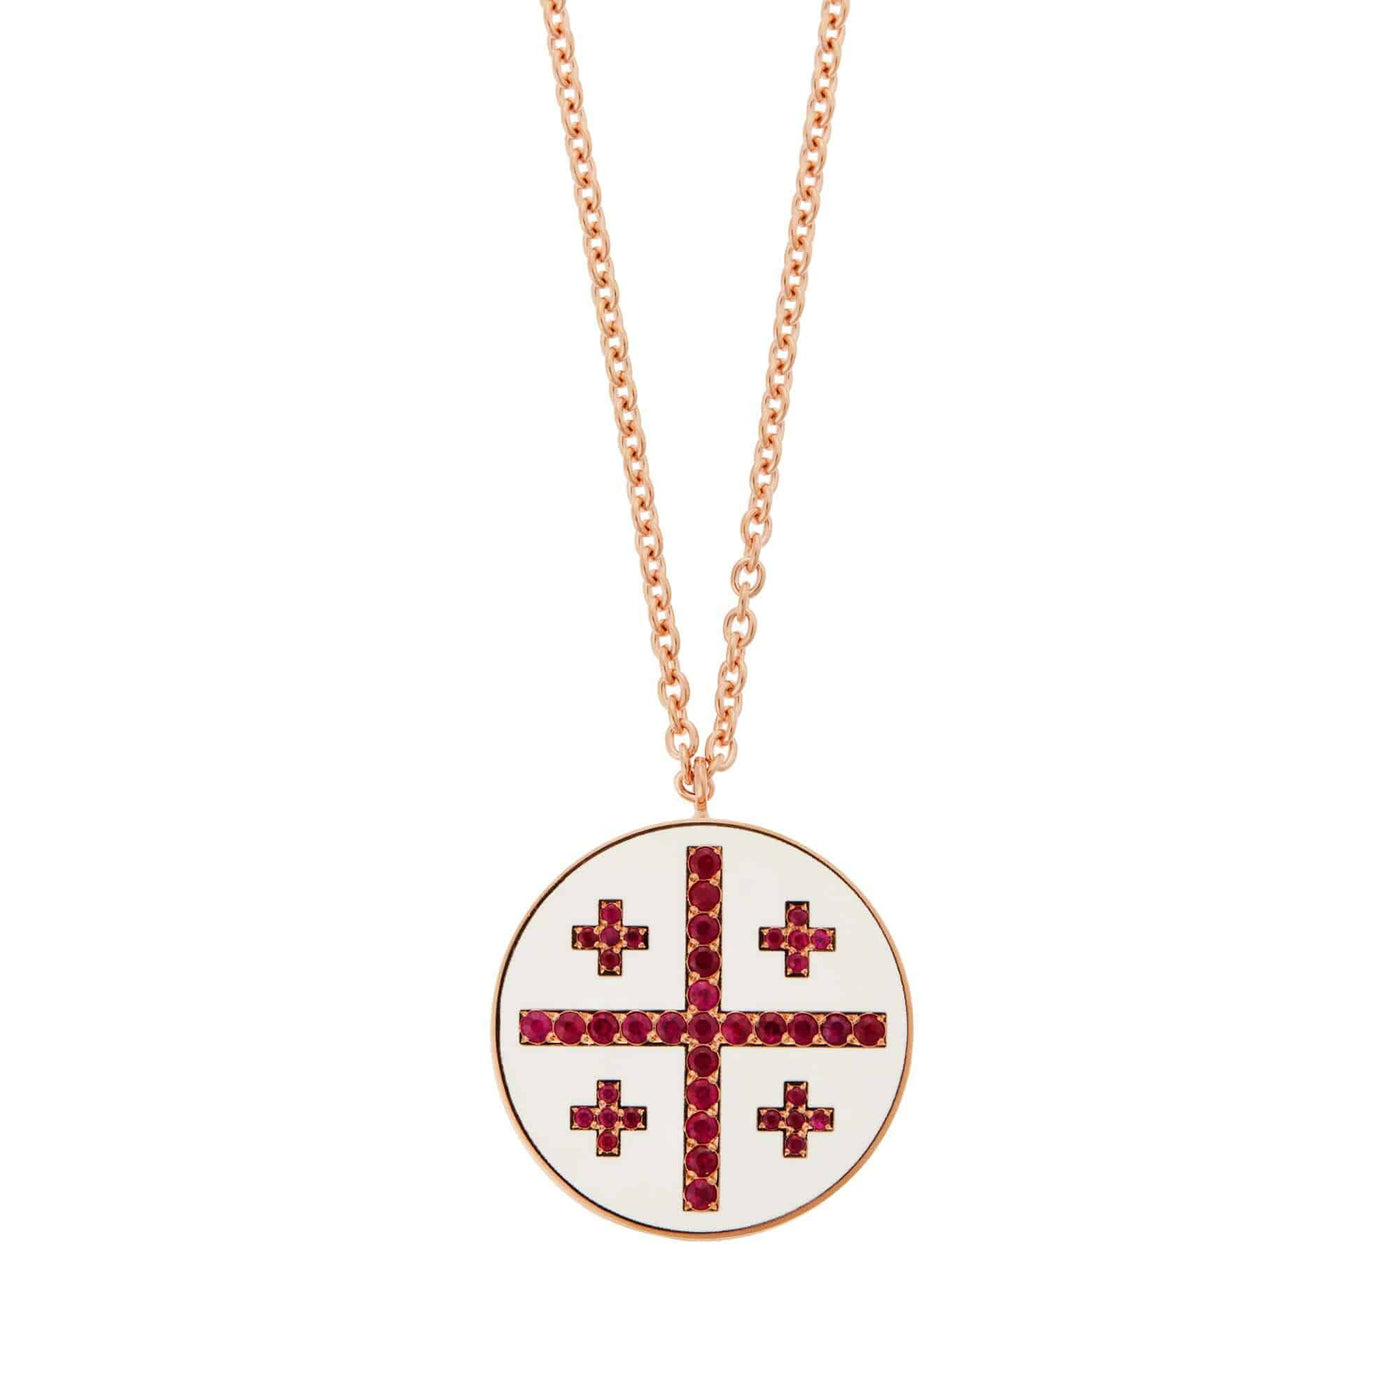 Jerusalem Cross Necklace - 1821 Liberty - Ileana Makri store